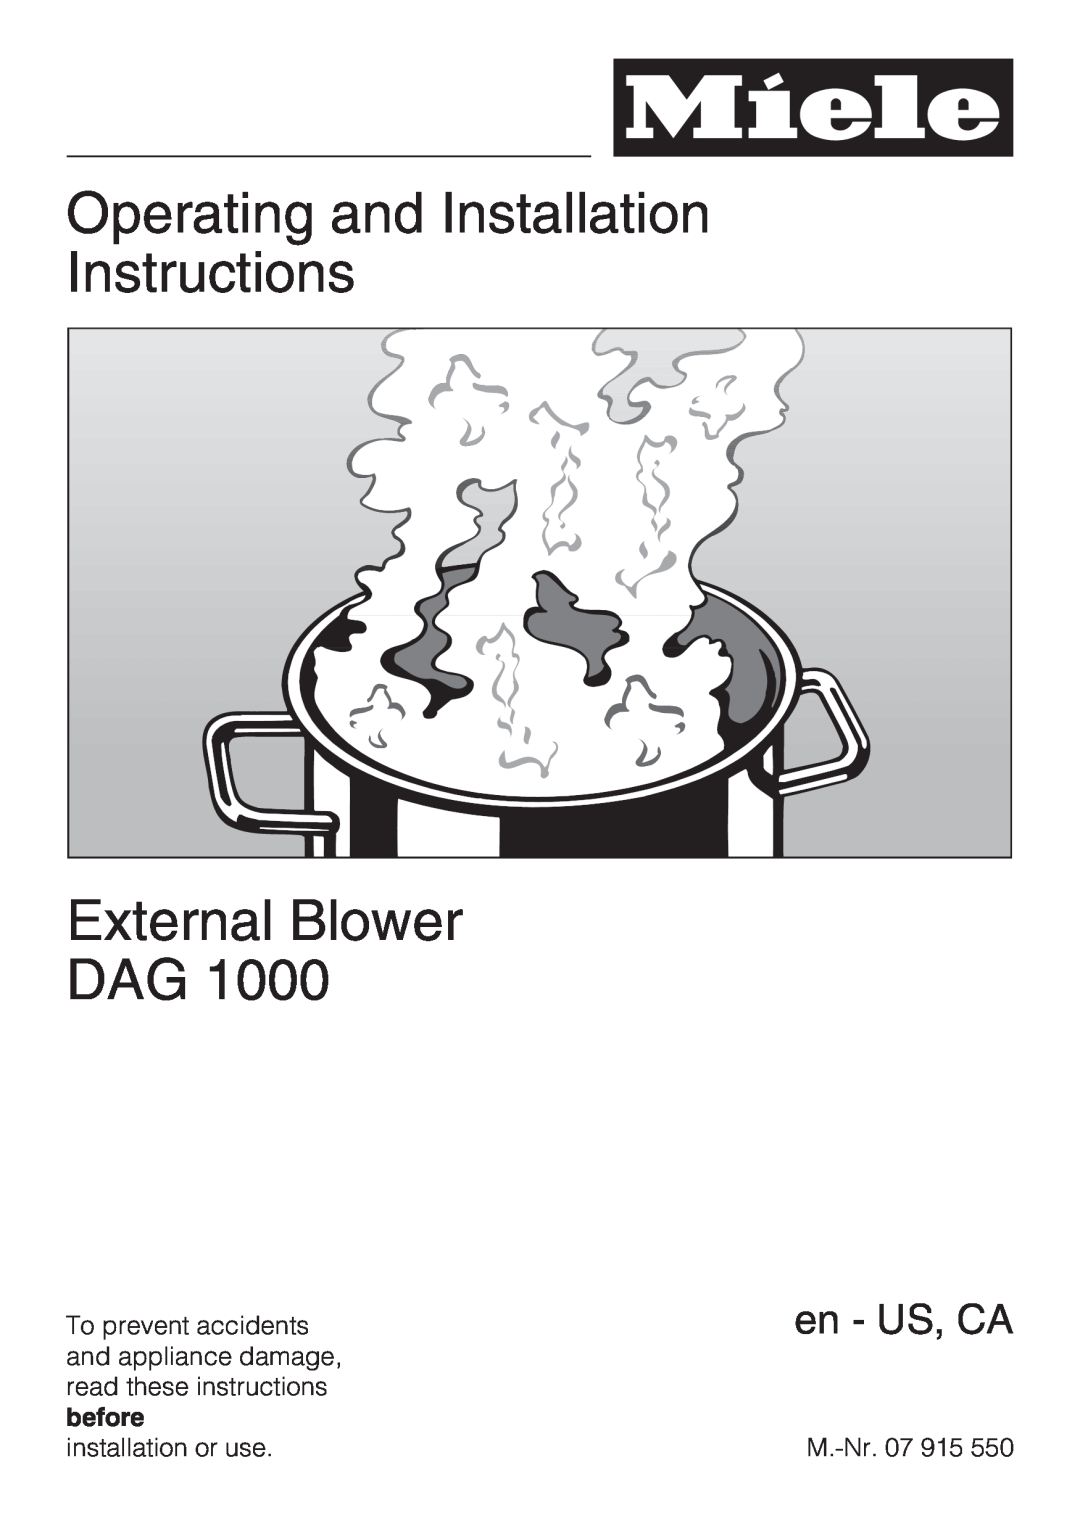 Miele miele External Blower installation instructions Operating and Installation Instructions, External Blower DAG 